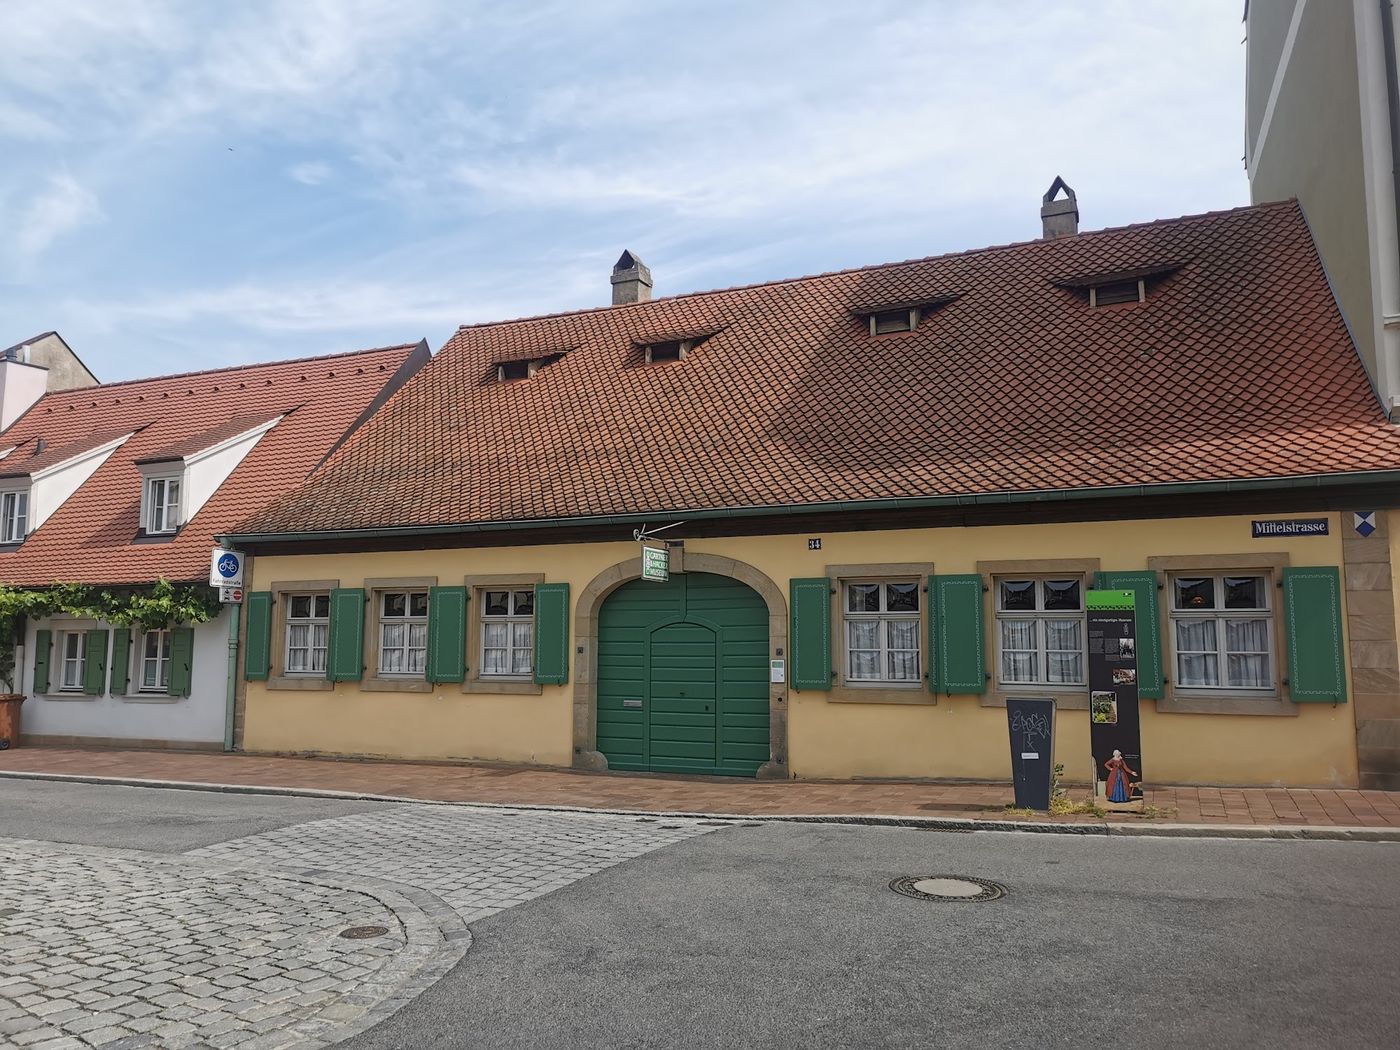 Einblicke in Bambergs Gartenkultur